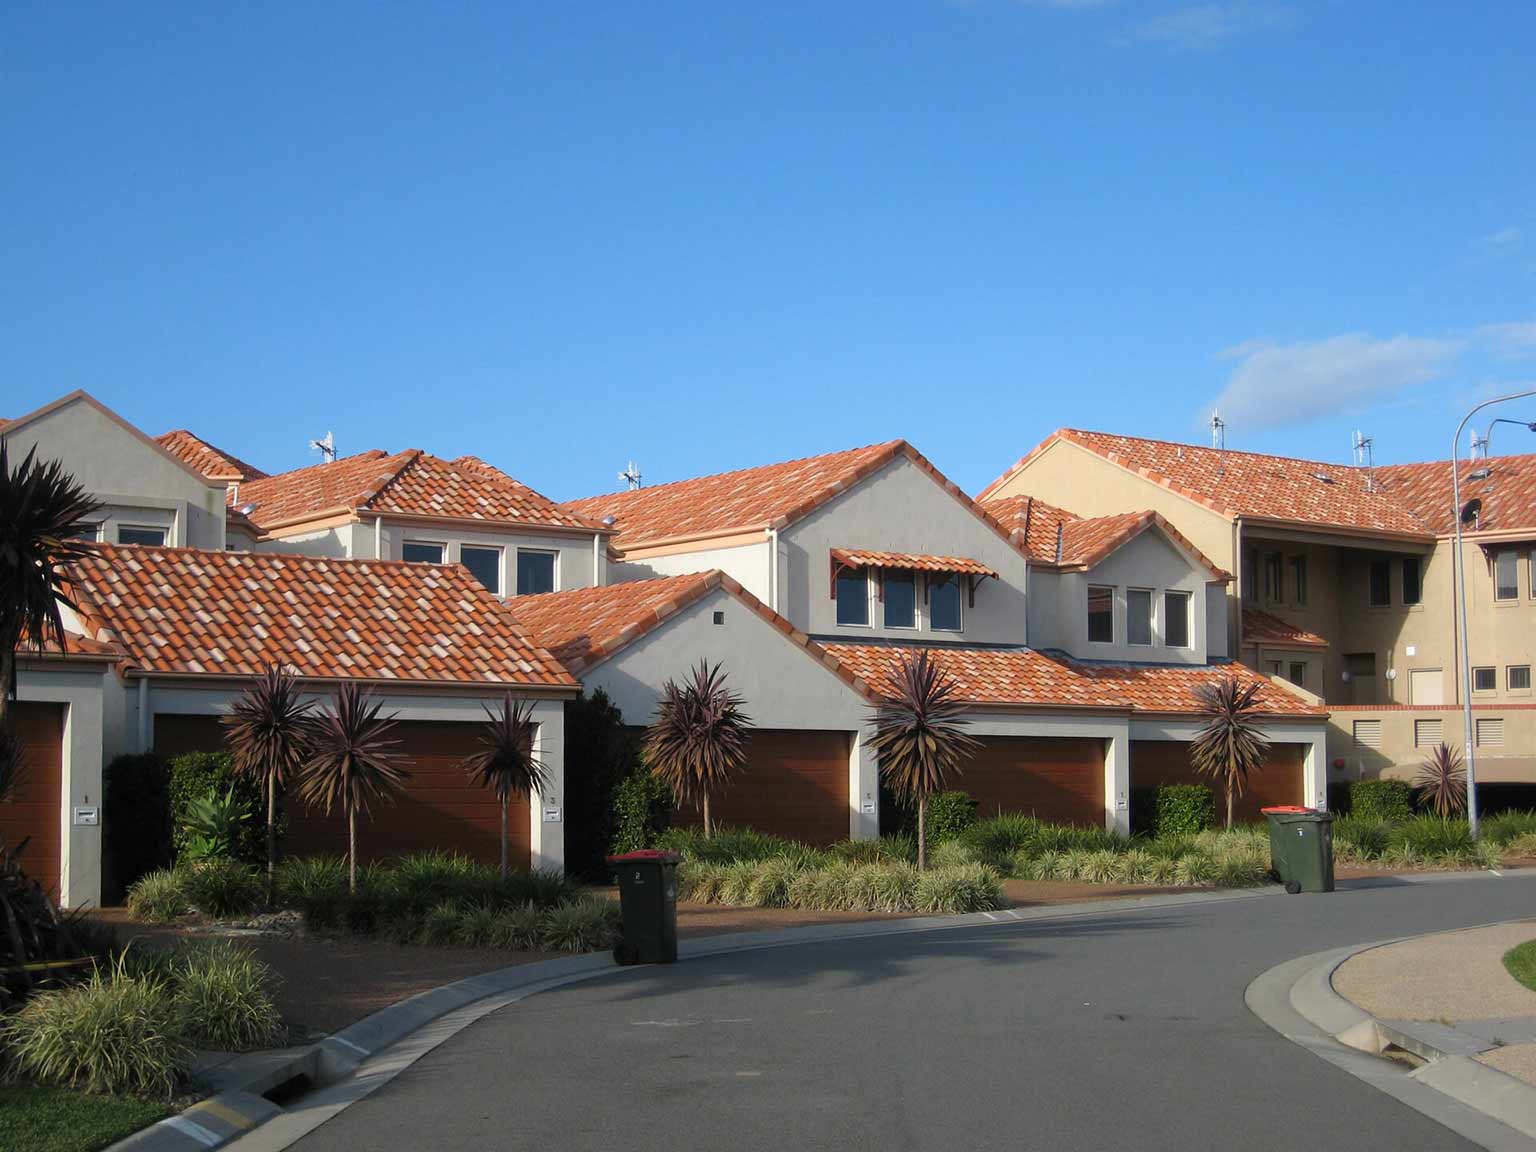 Residential Complex — Aspex Construction in Port Macquarie, NSW